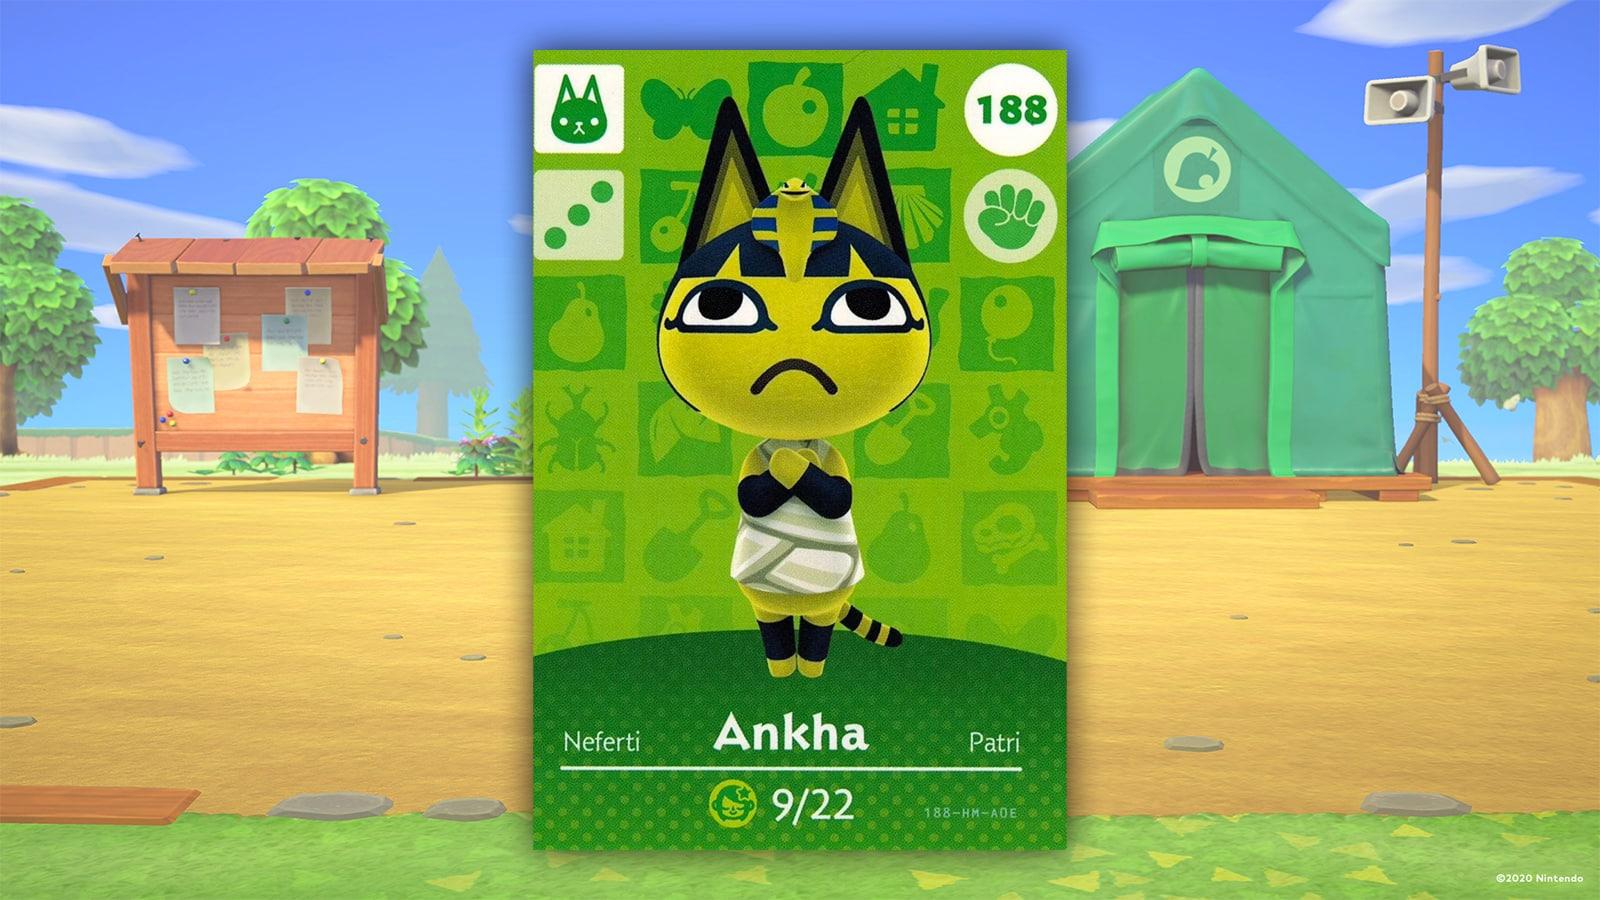 Ankha Amiibo Card in Animal Crossing New Horizons